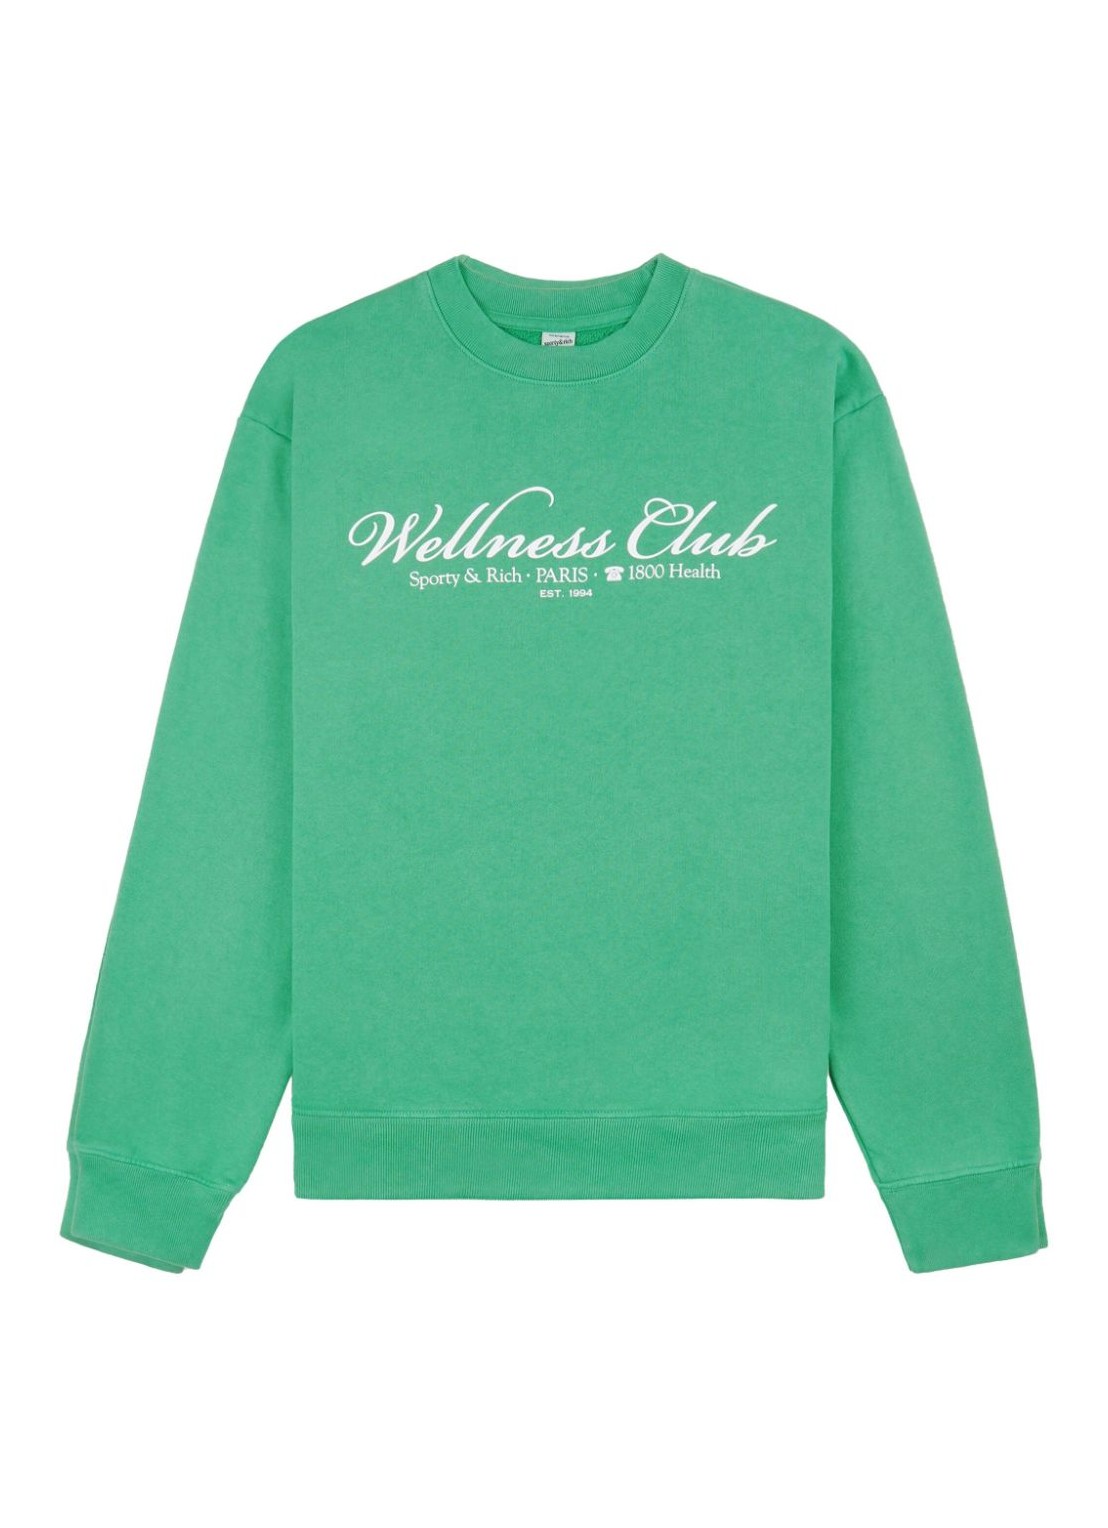 Sudadera sporty & rich sweater woman1800 health crewneck - ws067s405hv verde talla L
 